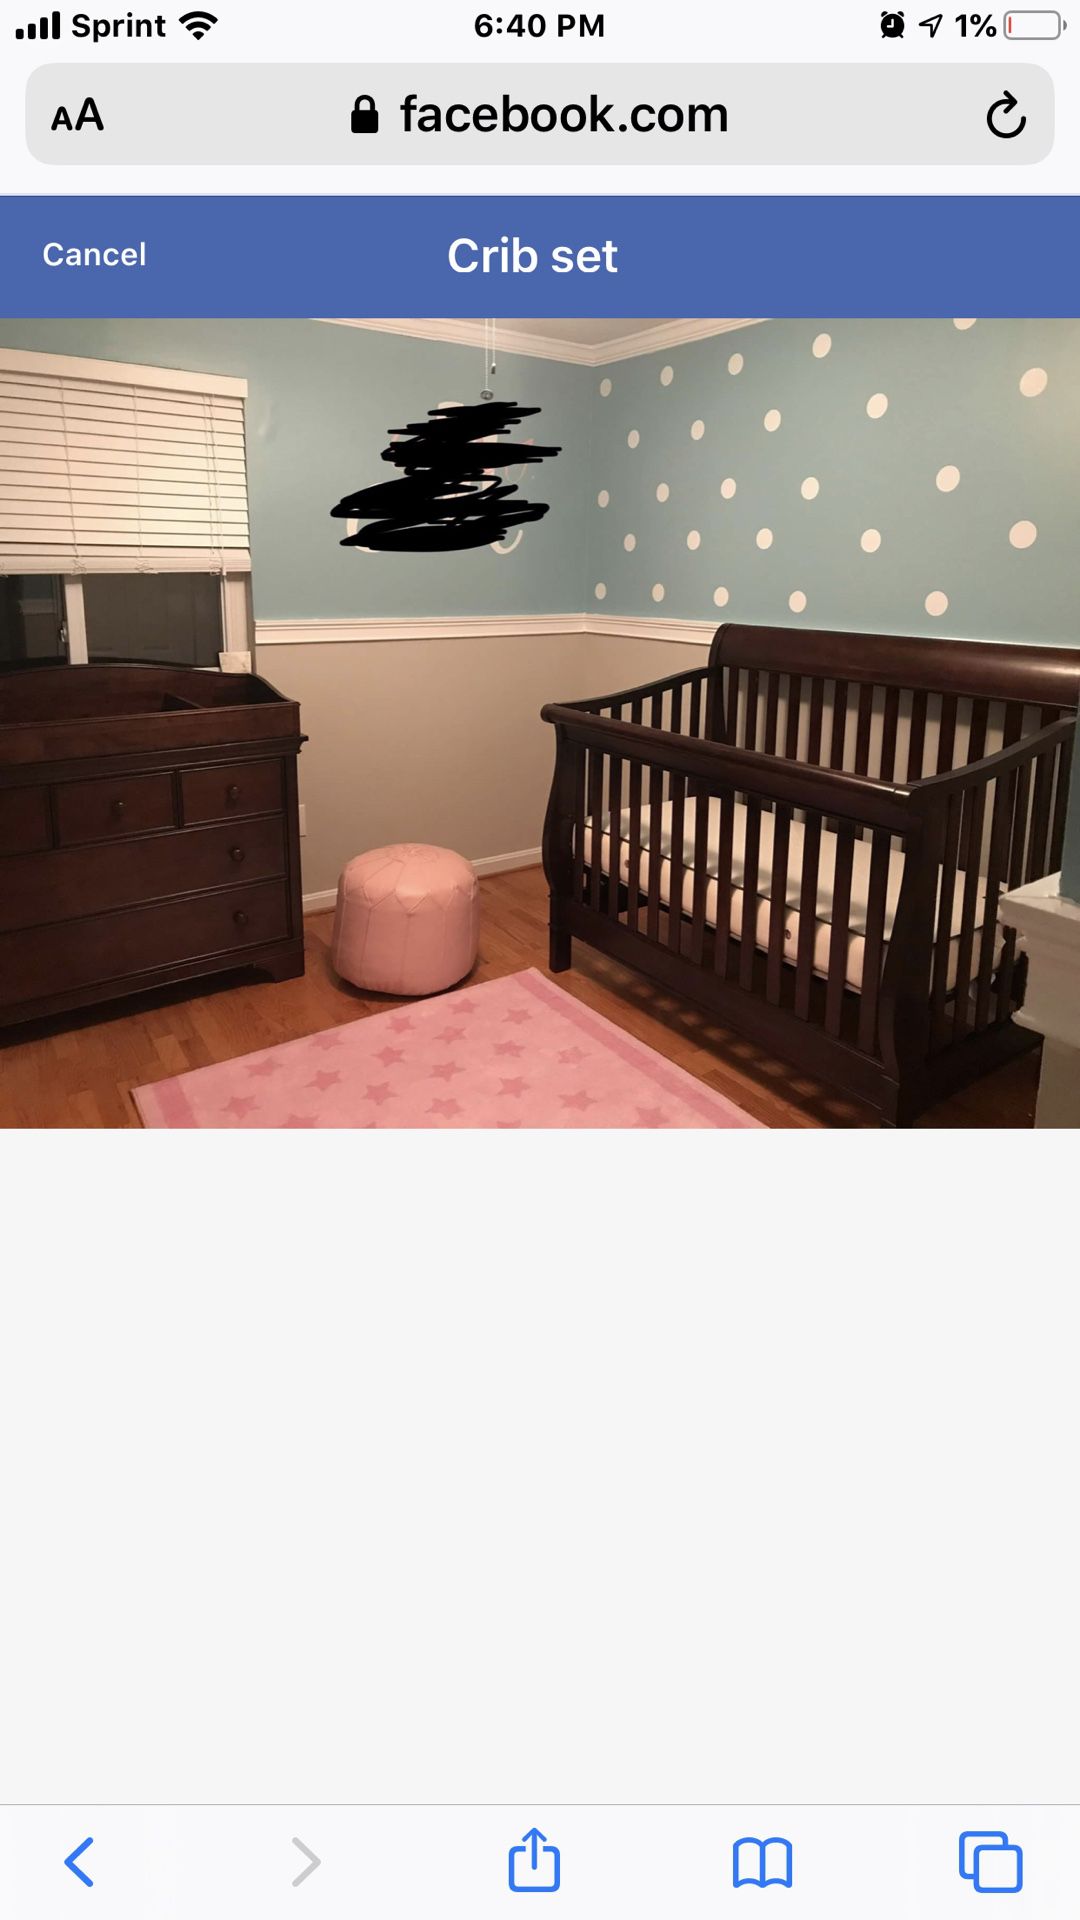 Crib set